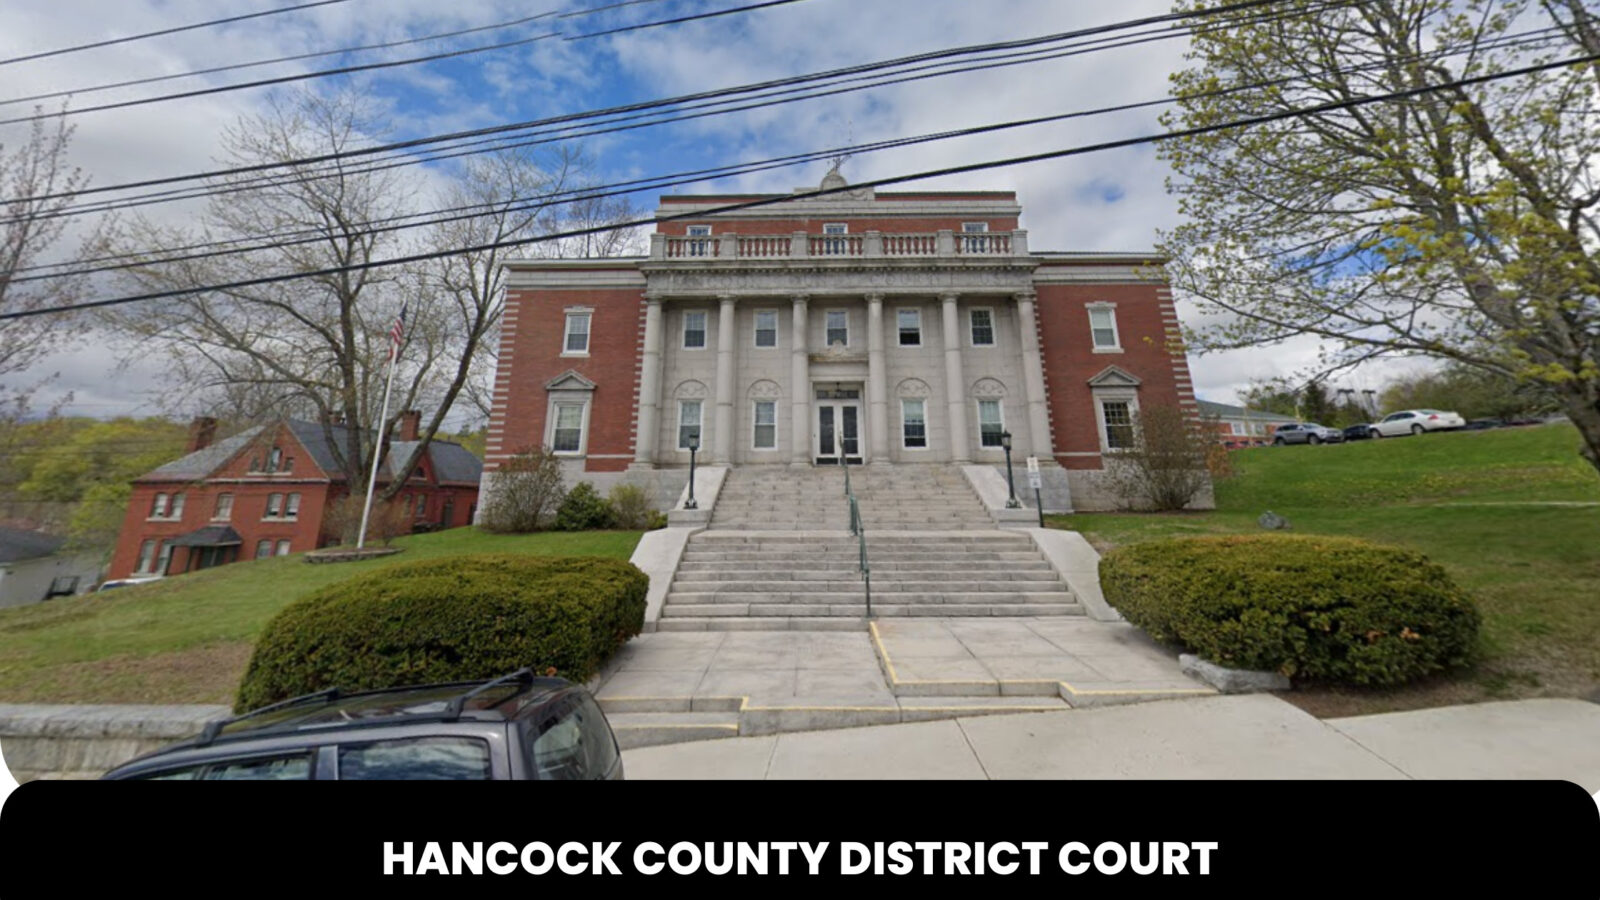 Hancock County District Court